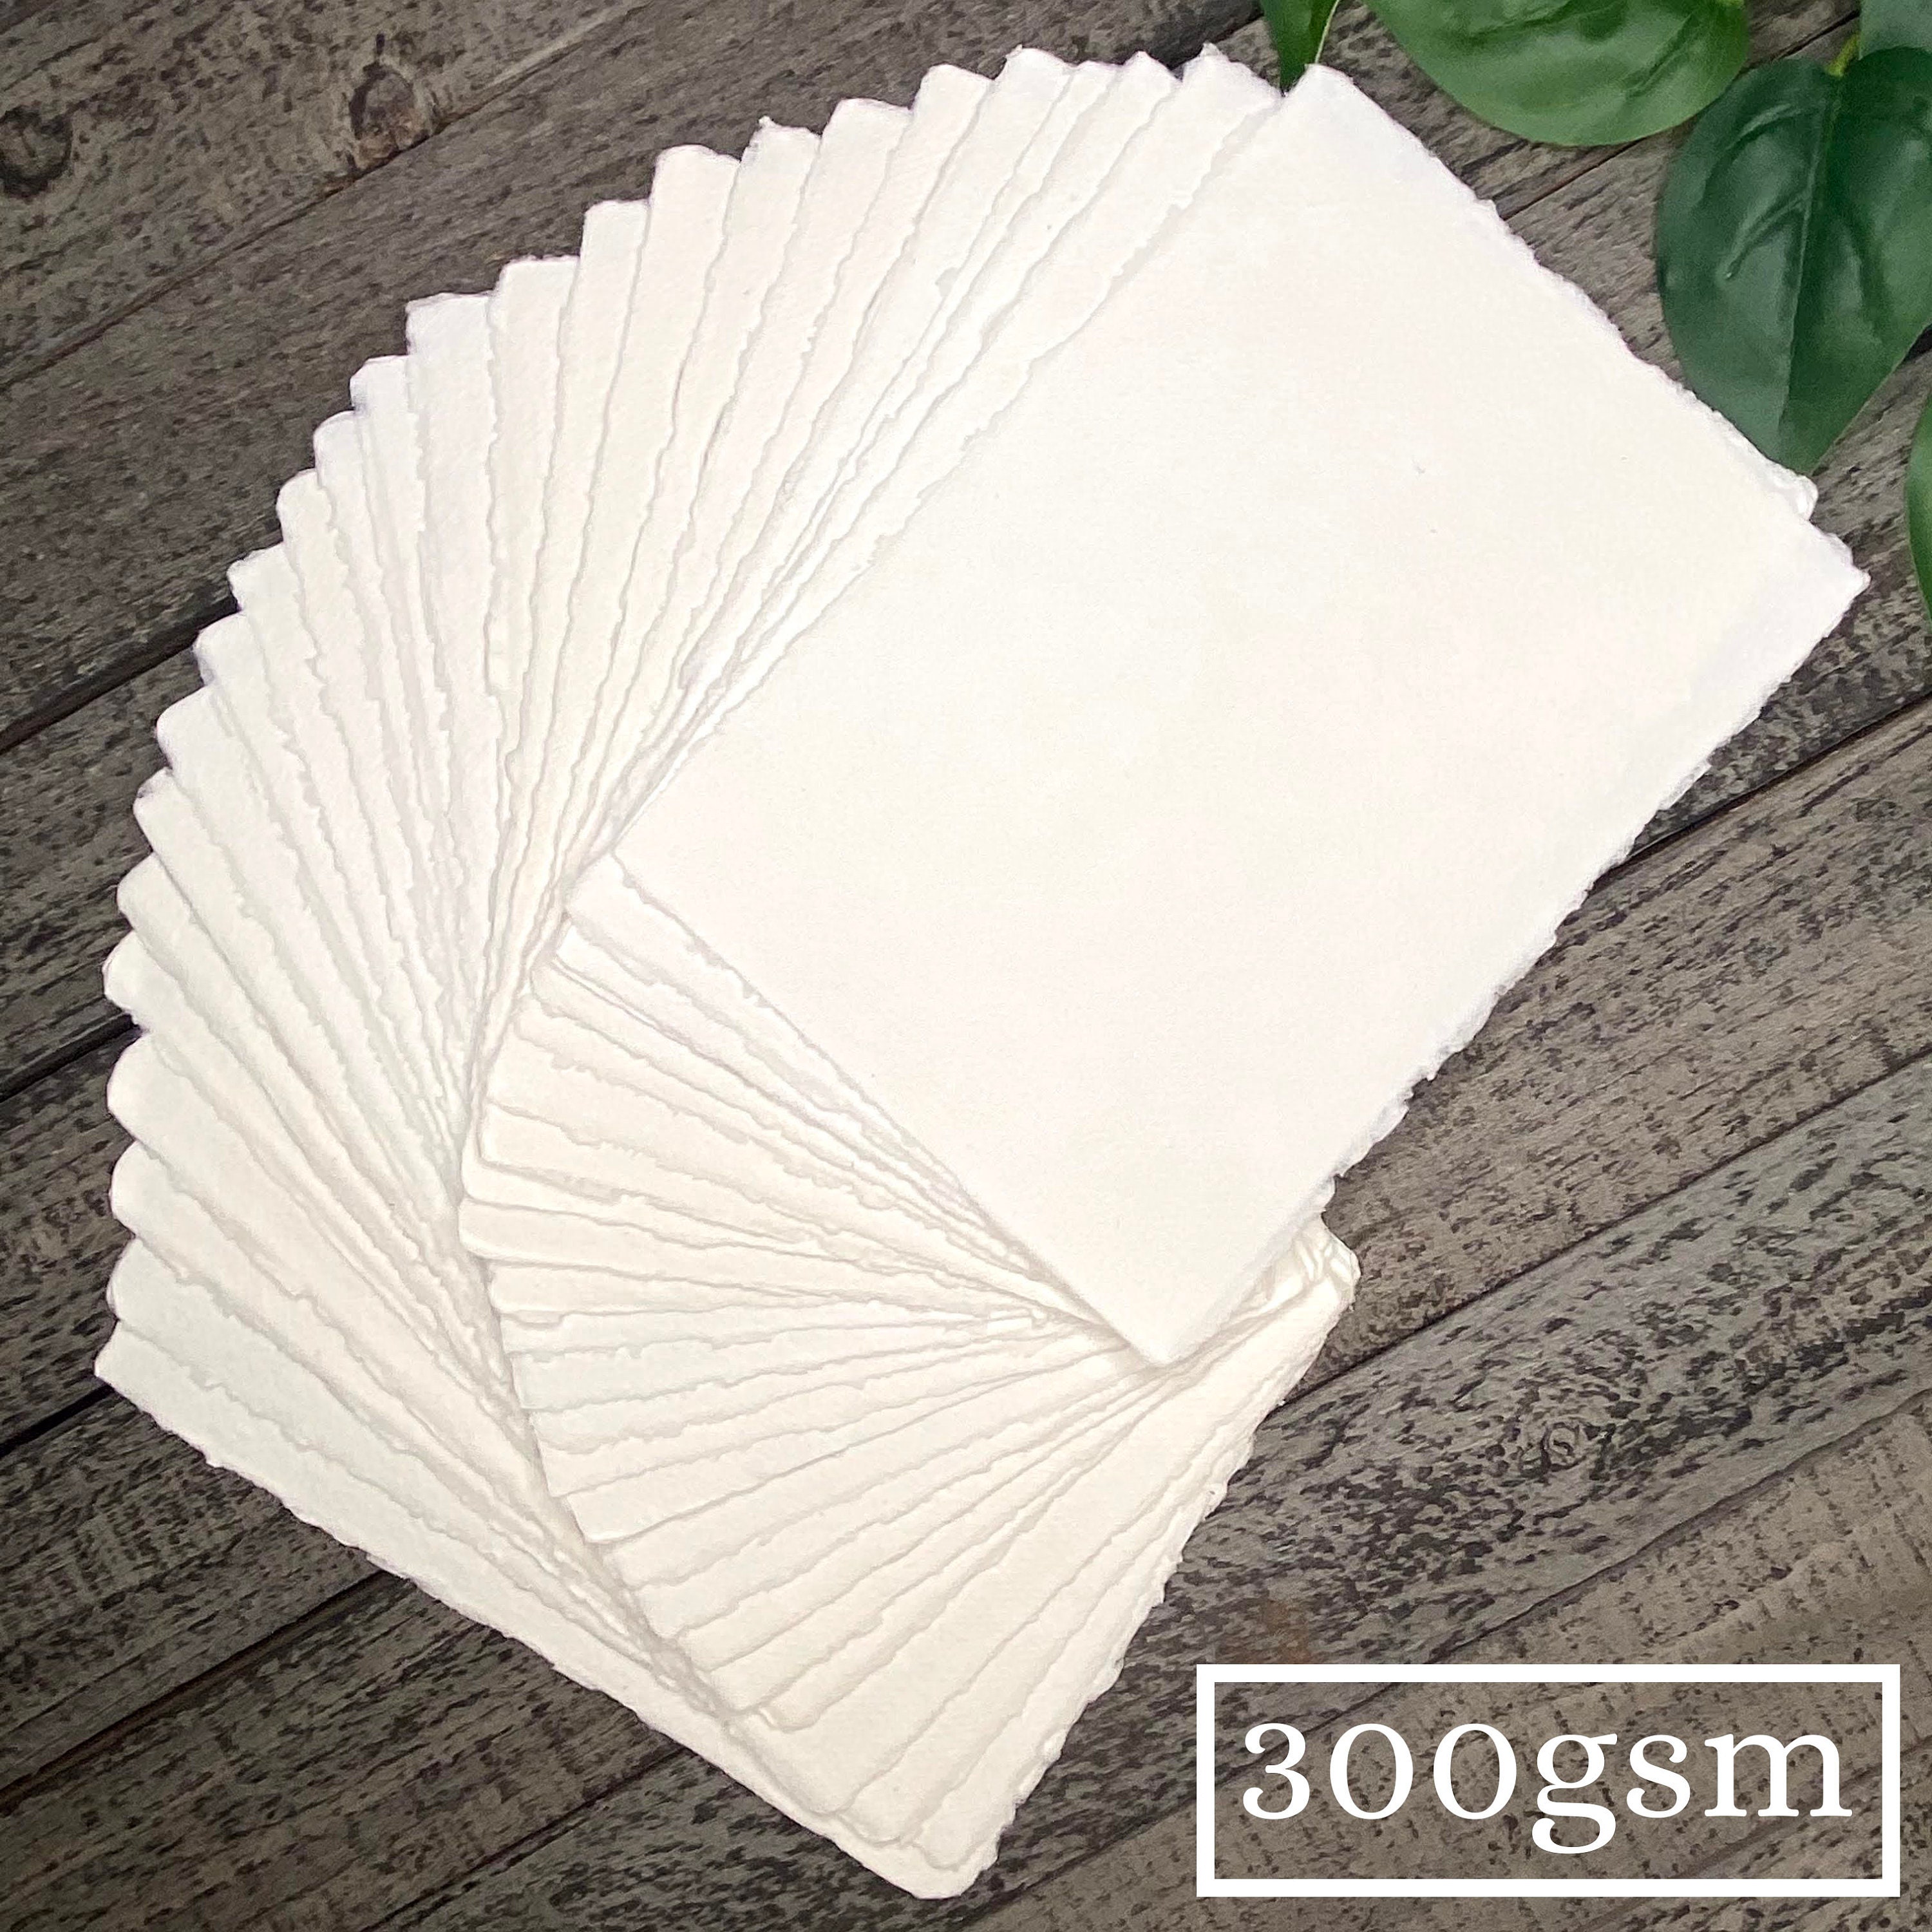 300gsm Handmade Cotton Paper, Set of 10 Pieces Deckle Edge